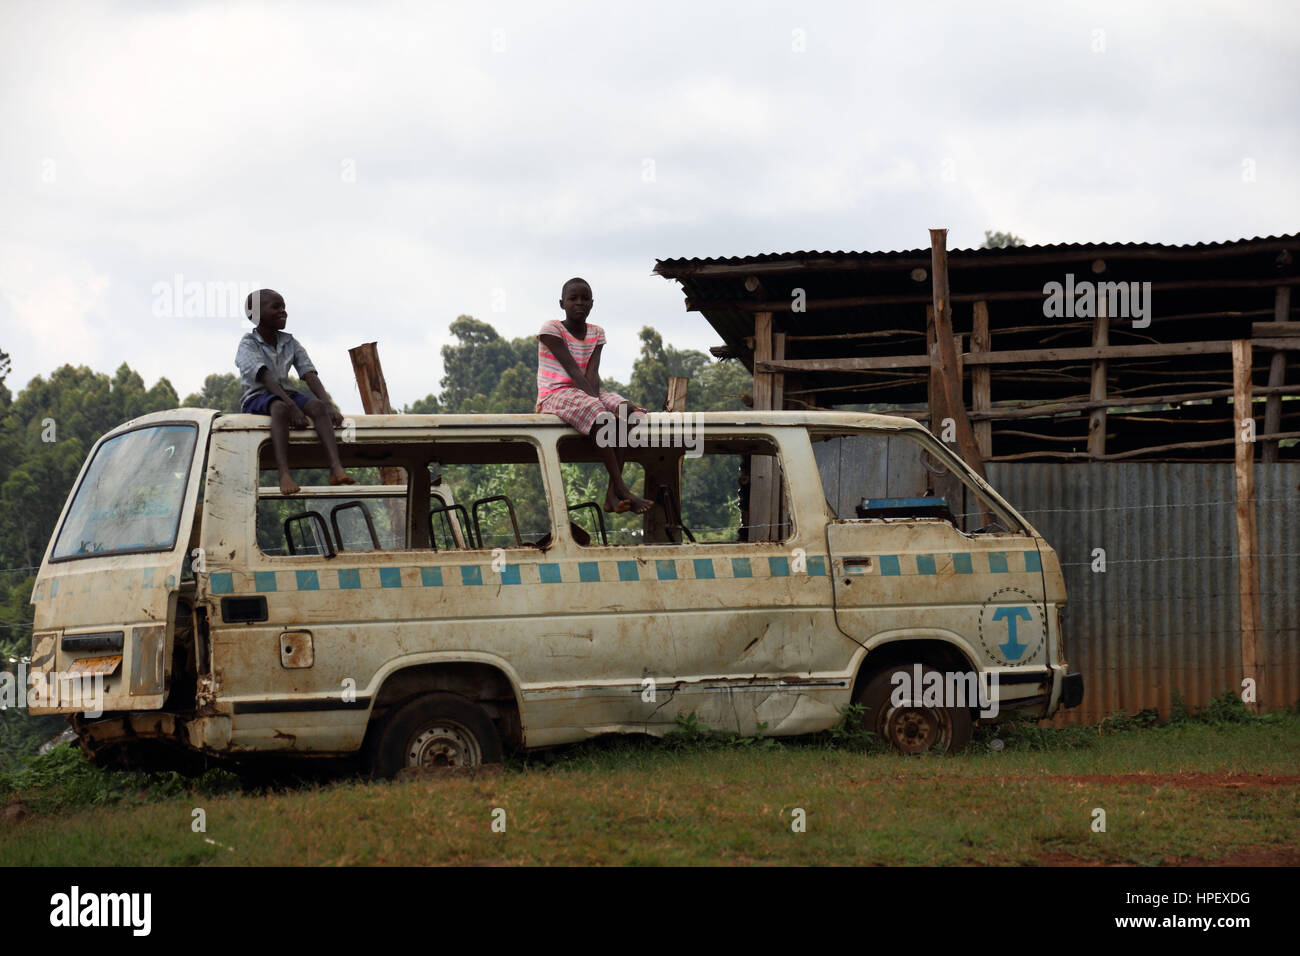 Two children sitting on a broken taxi bus (matatu) in Uganda Stock Photo